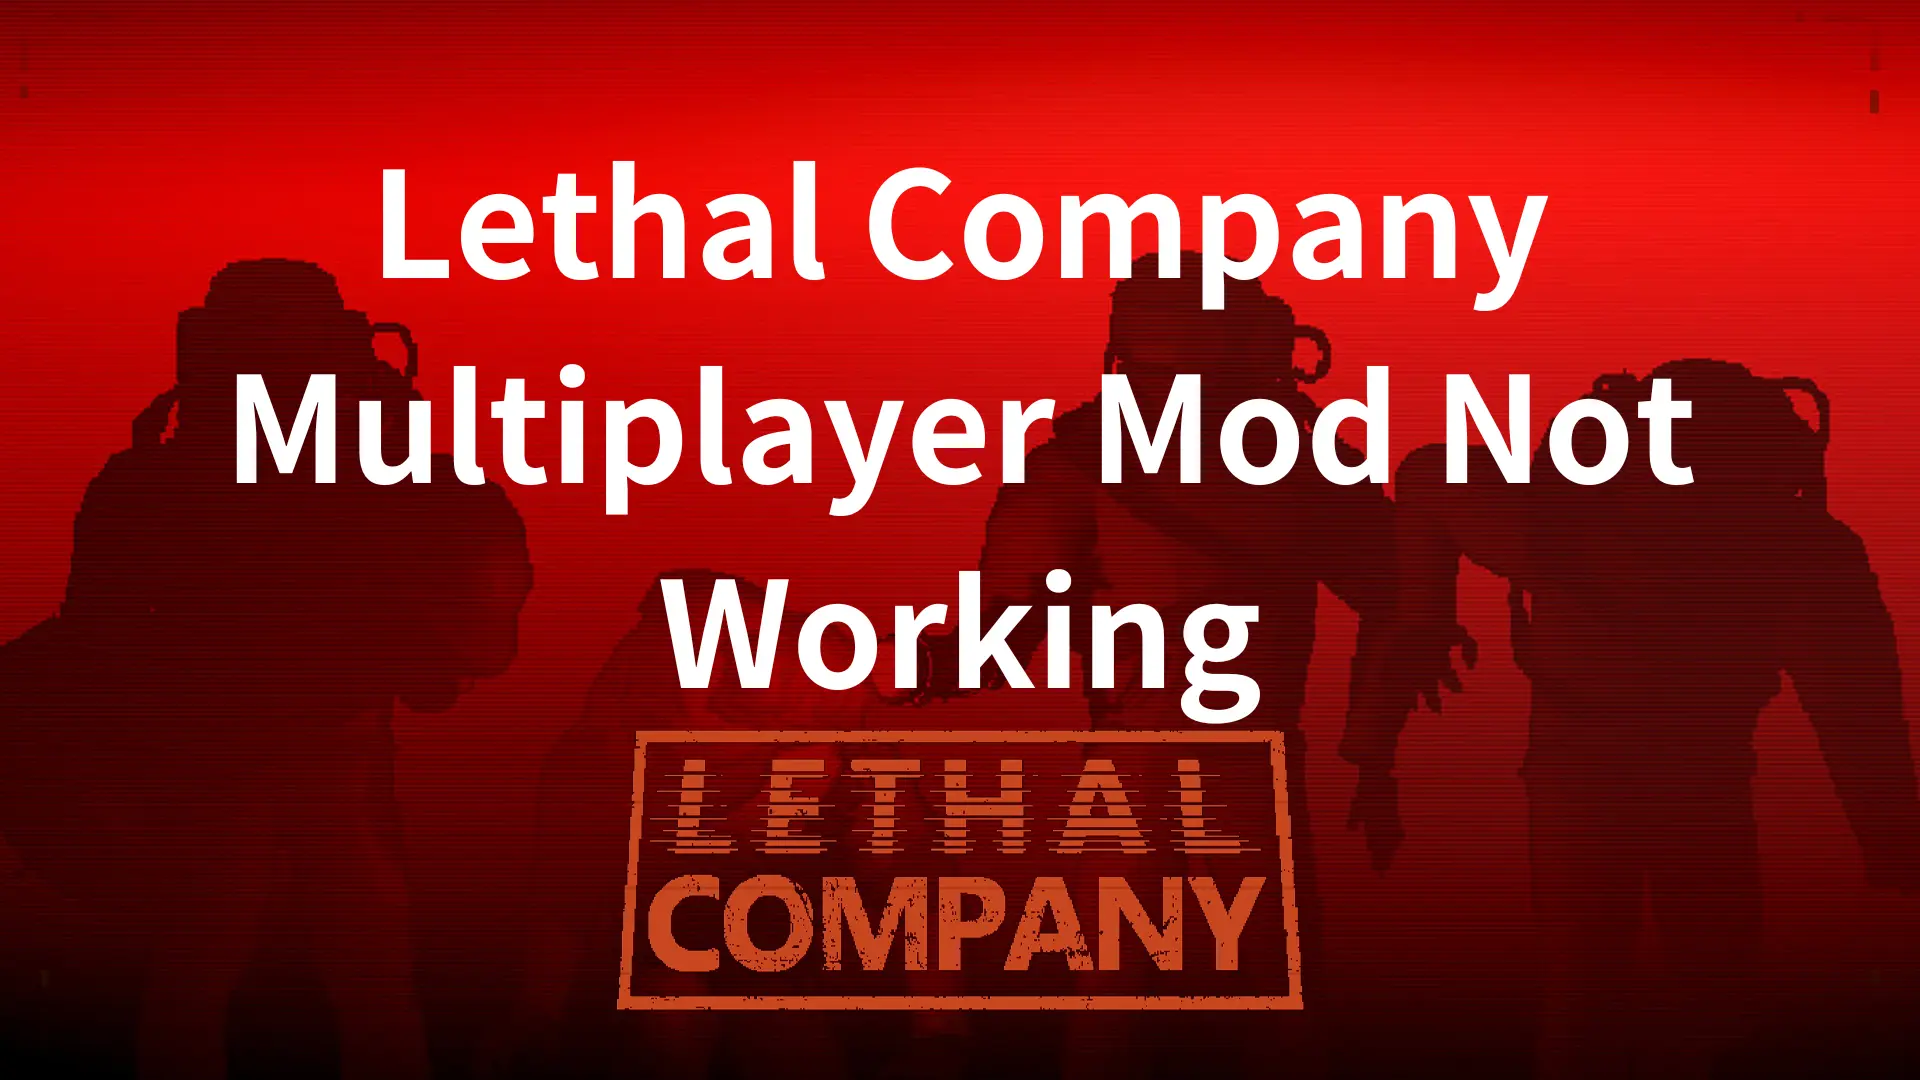 Is Lethal Company cross platform?